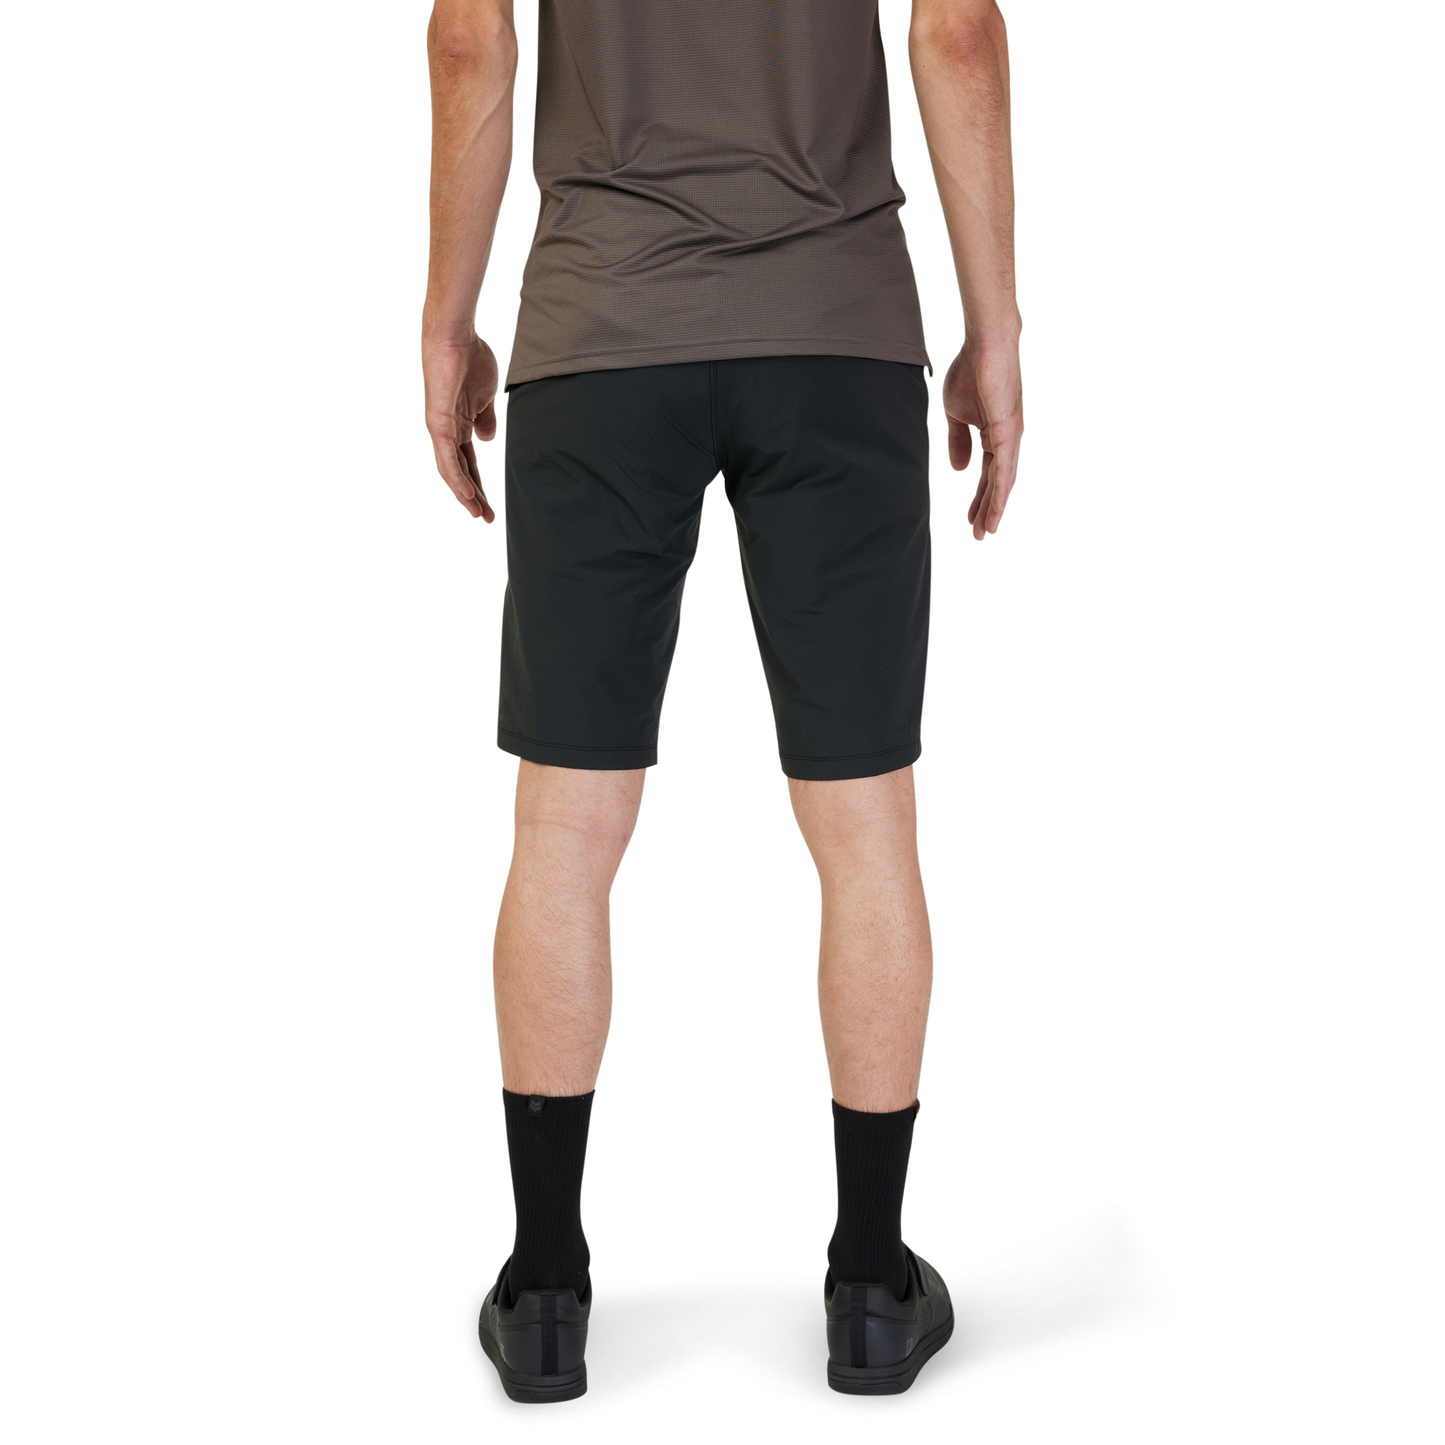 Fox Flexair Shorts With Liner - 2XL-38 - Black - Image 4